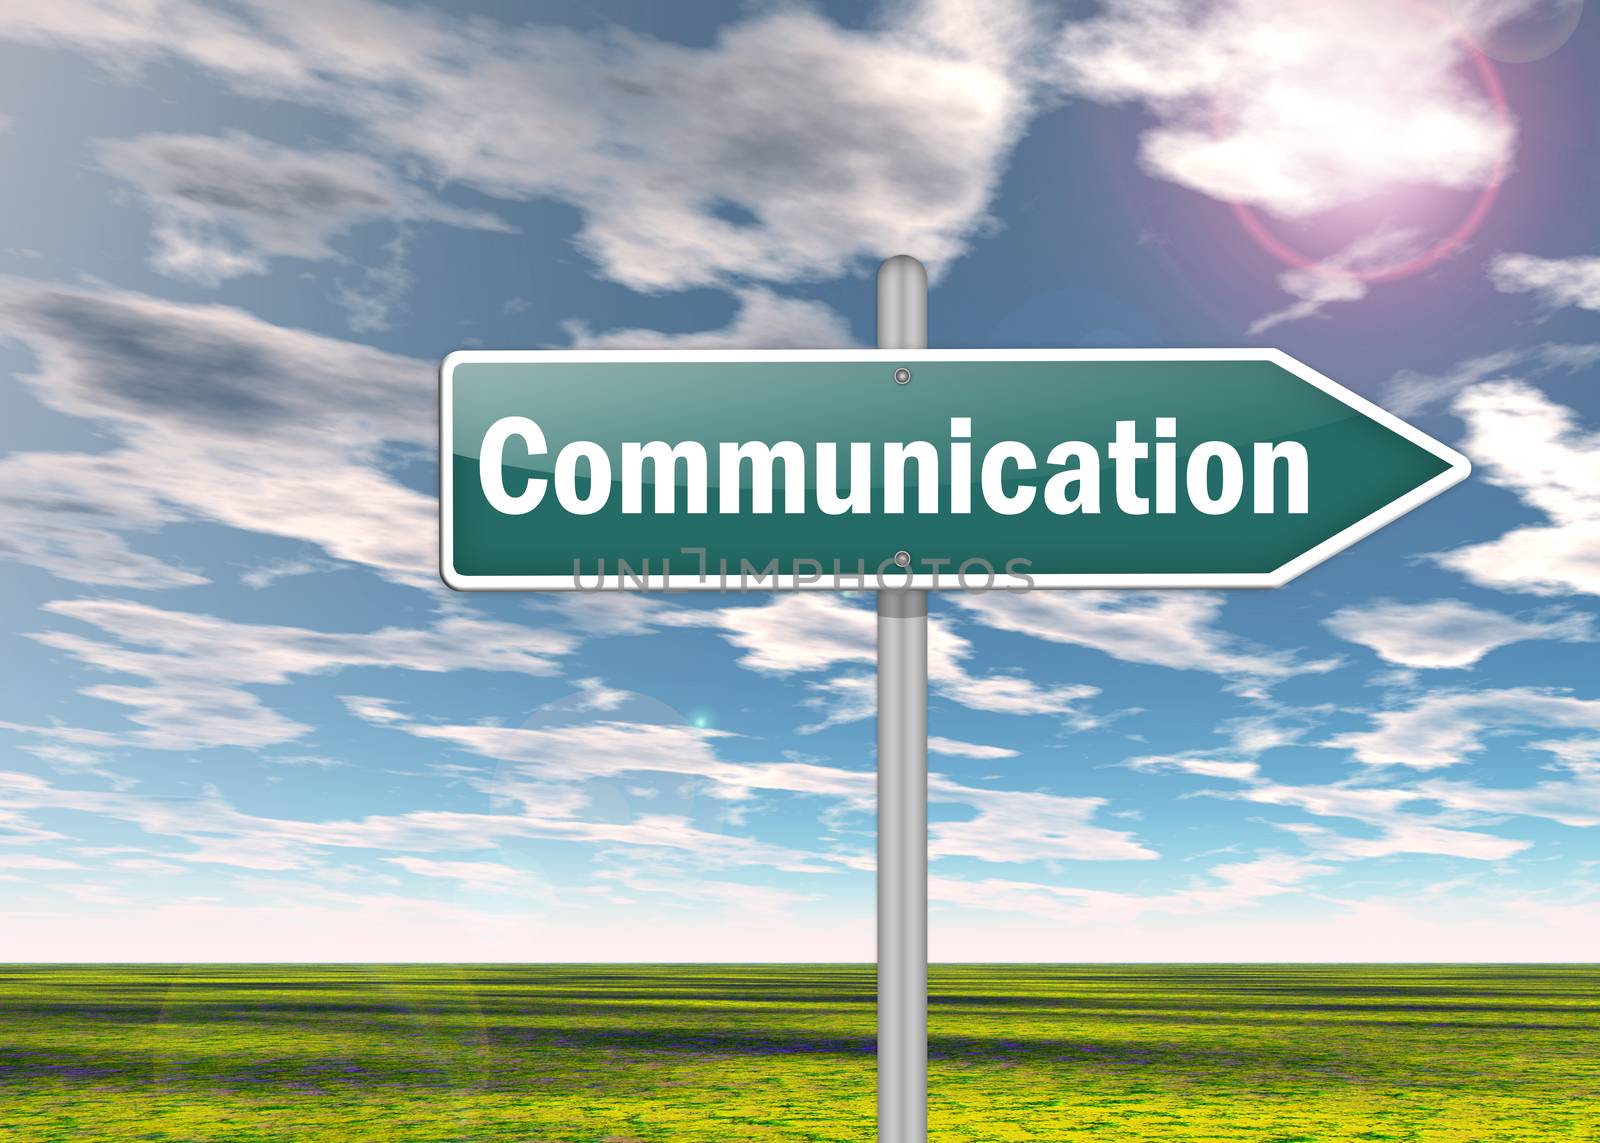 Signpost "Communication"